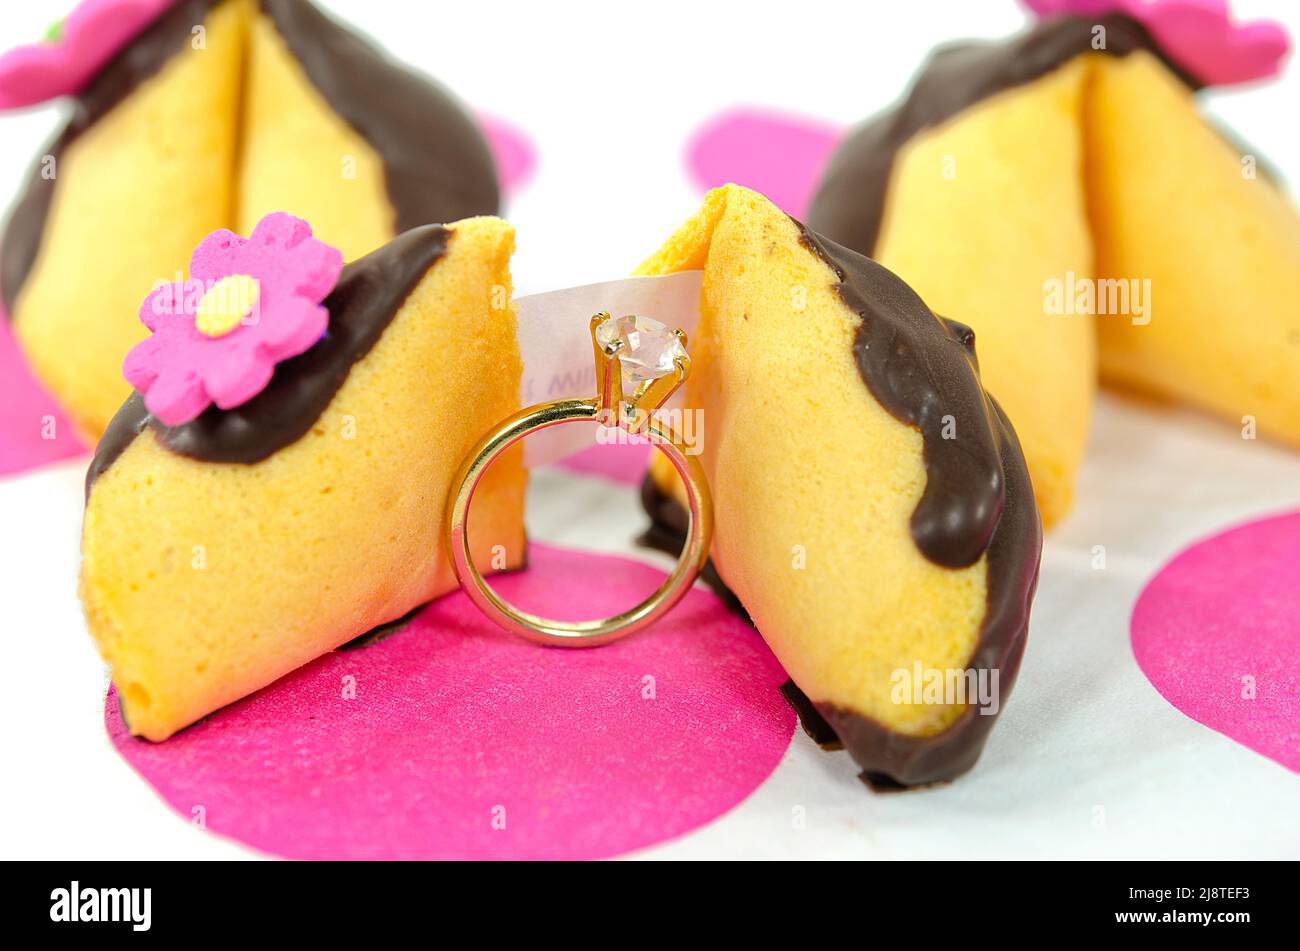 Galleta de la fortuna del chocolate sumergida con anillo del compromiso del diamante Foto de stock